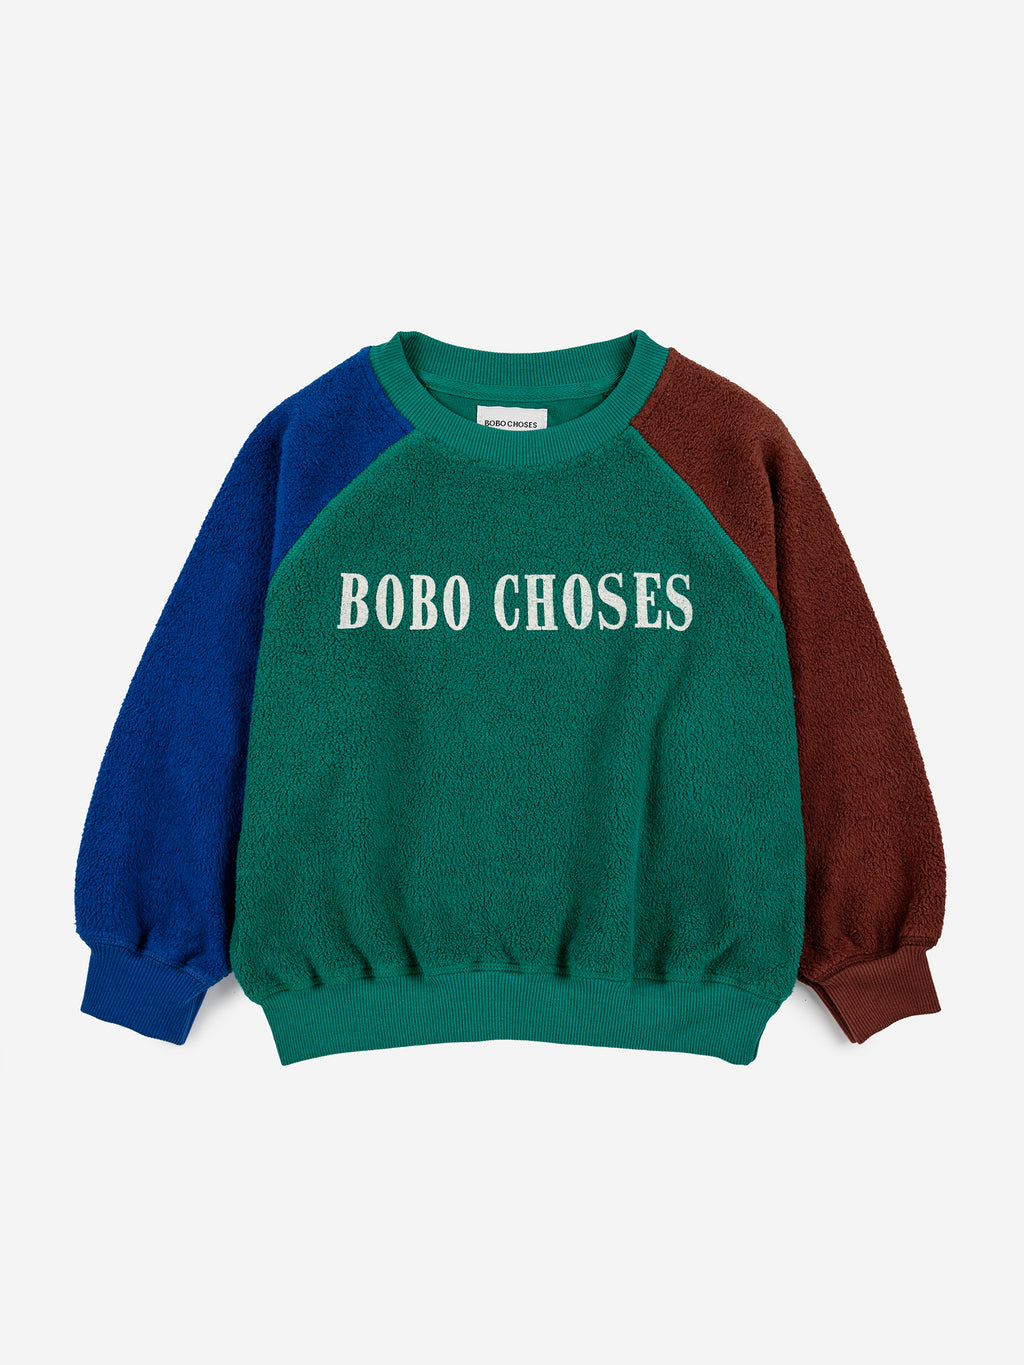 BOBO CHOSES / Color Block Sweater